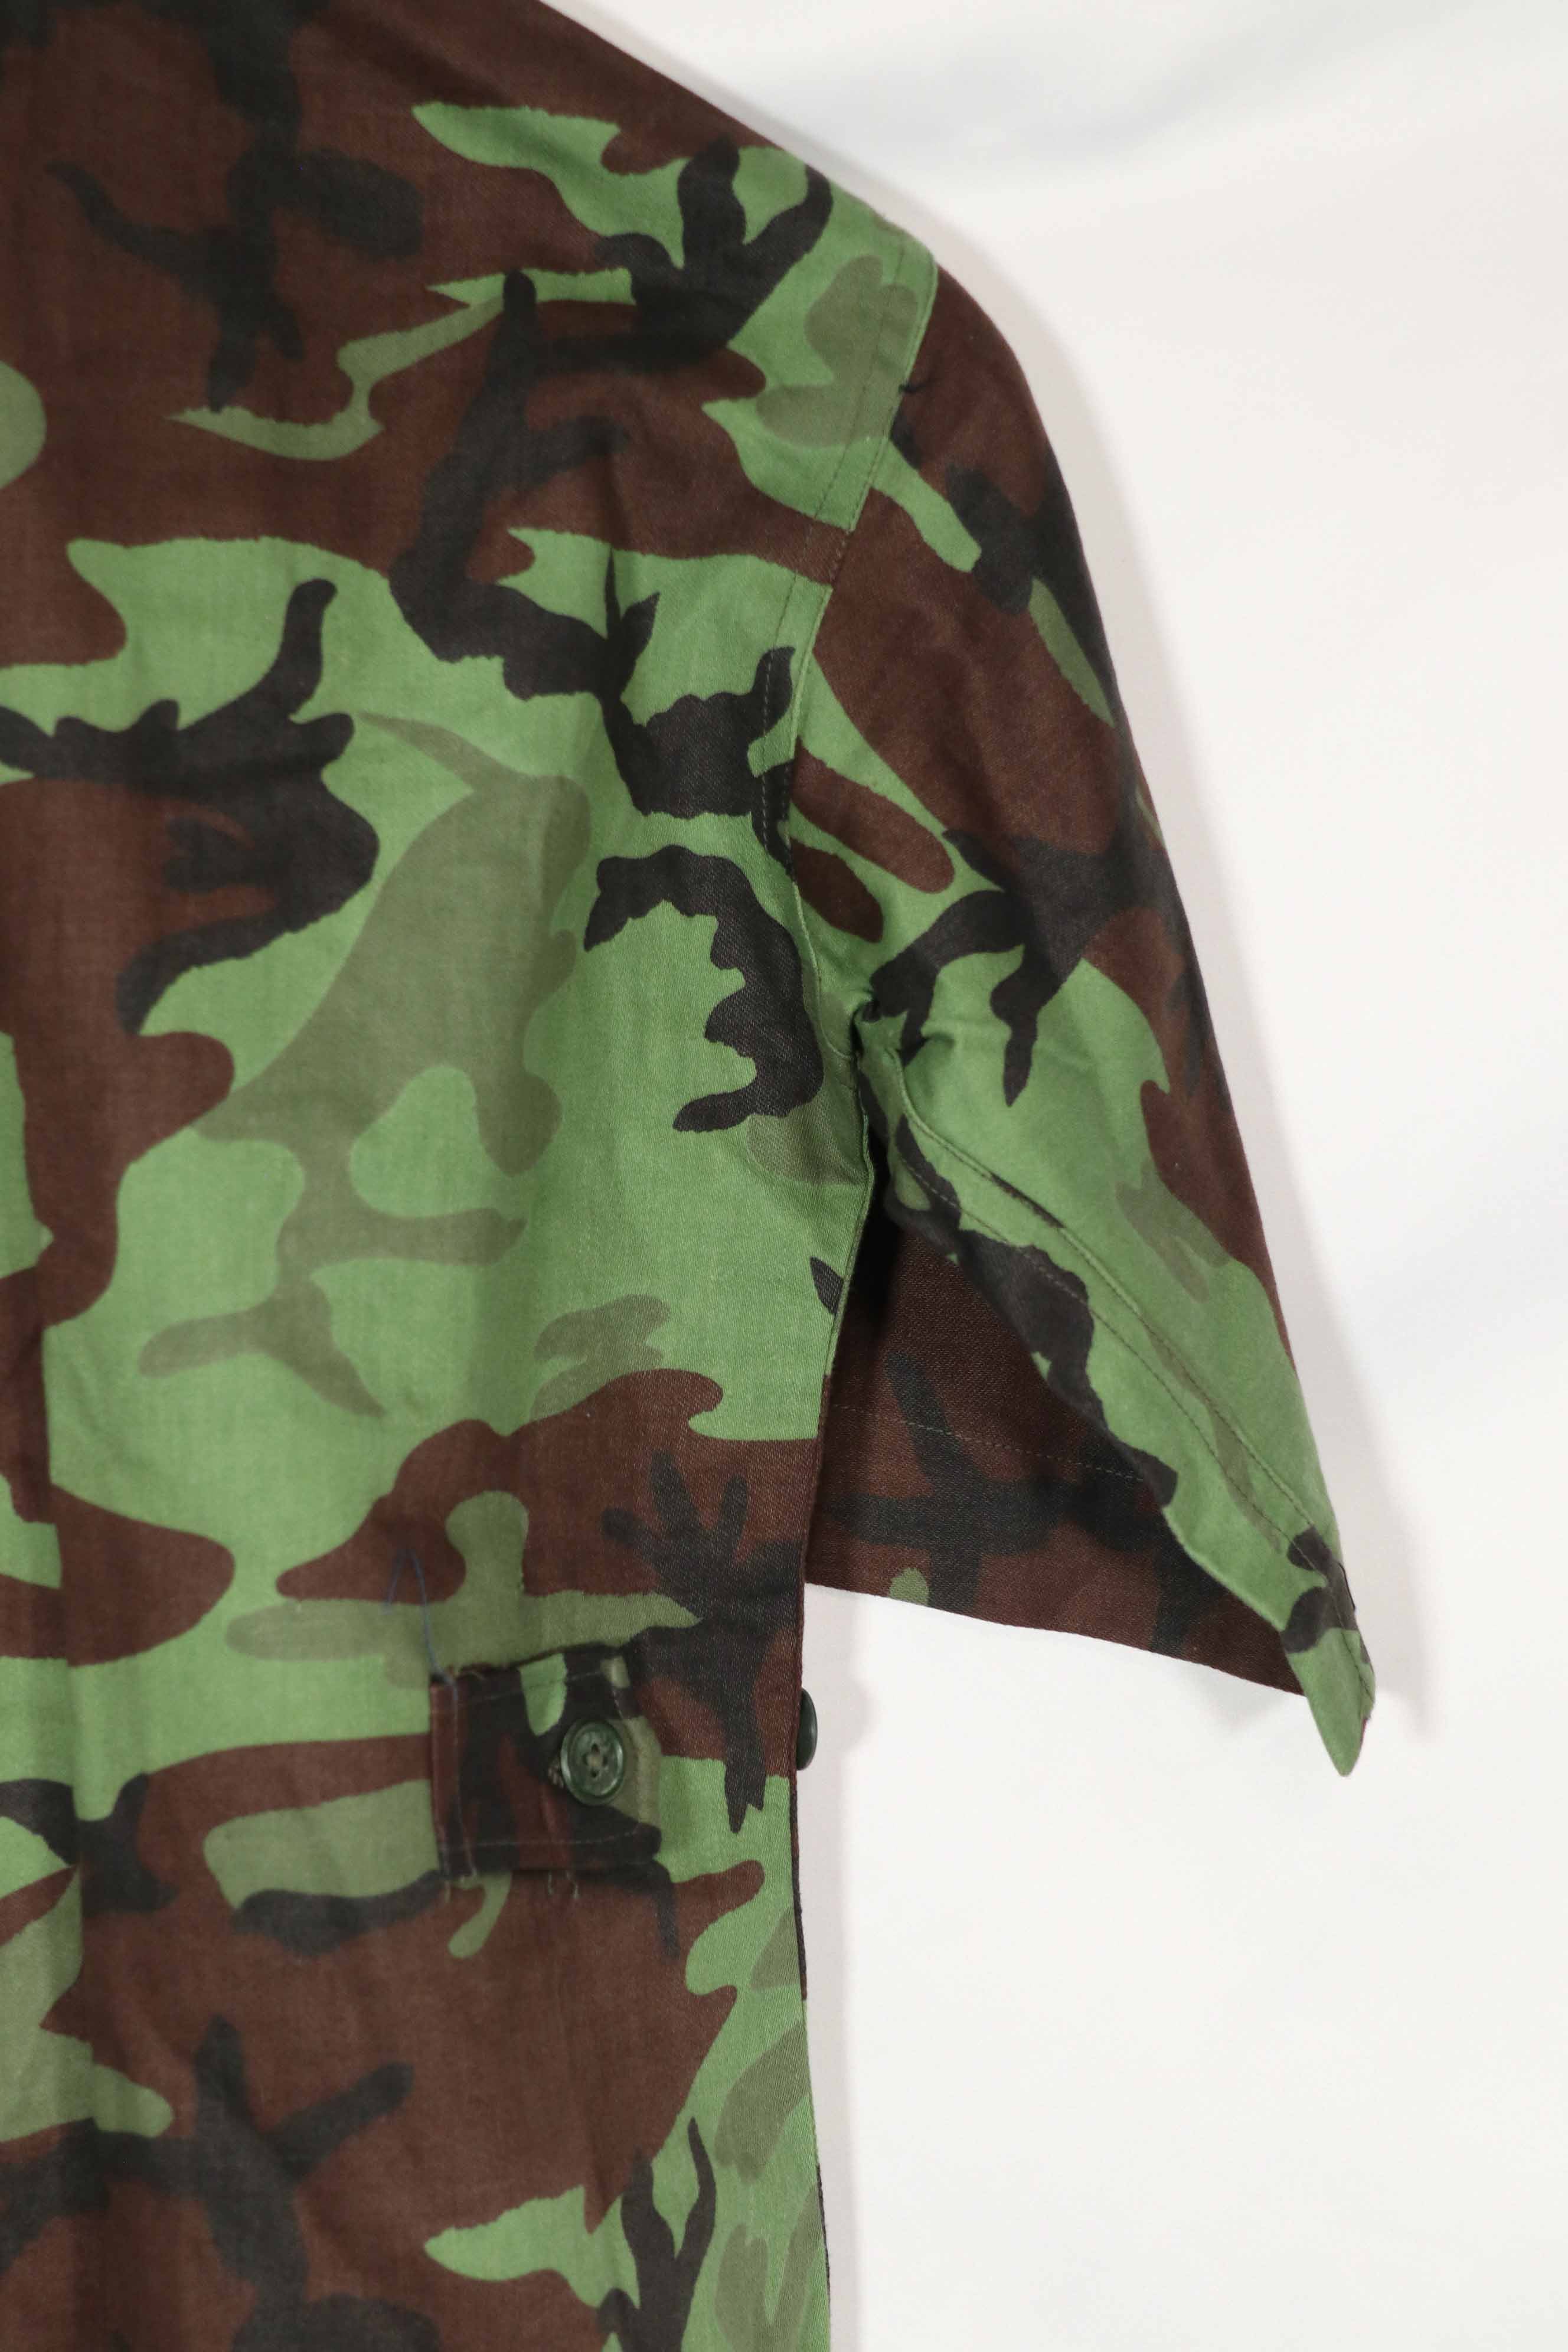 Real Unused South Vietnamese Ranger leaf camouflage jacket with short sleeves.